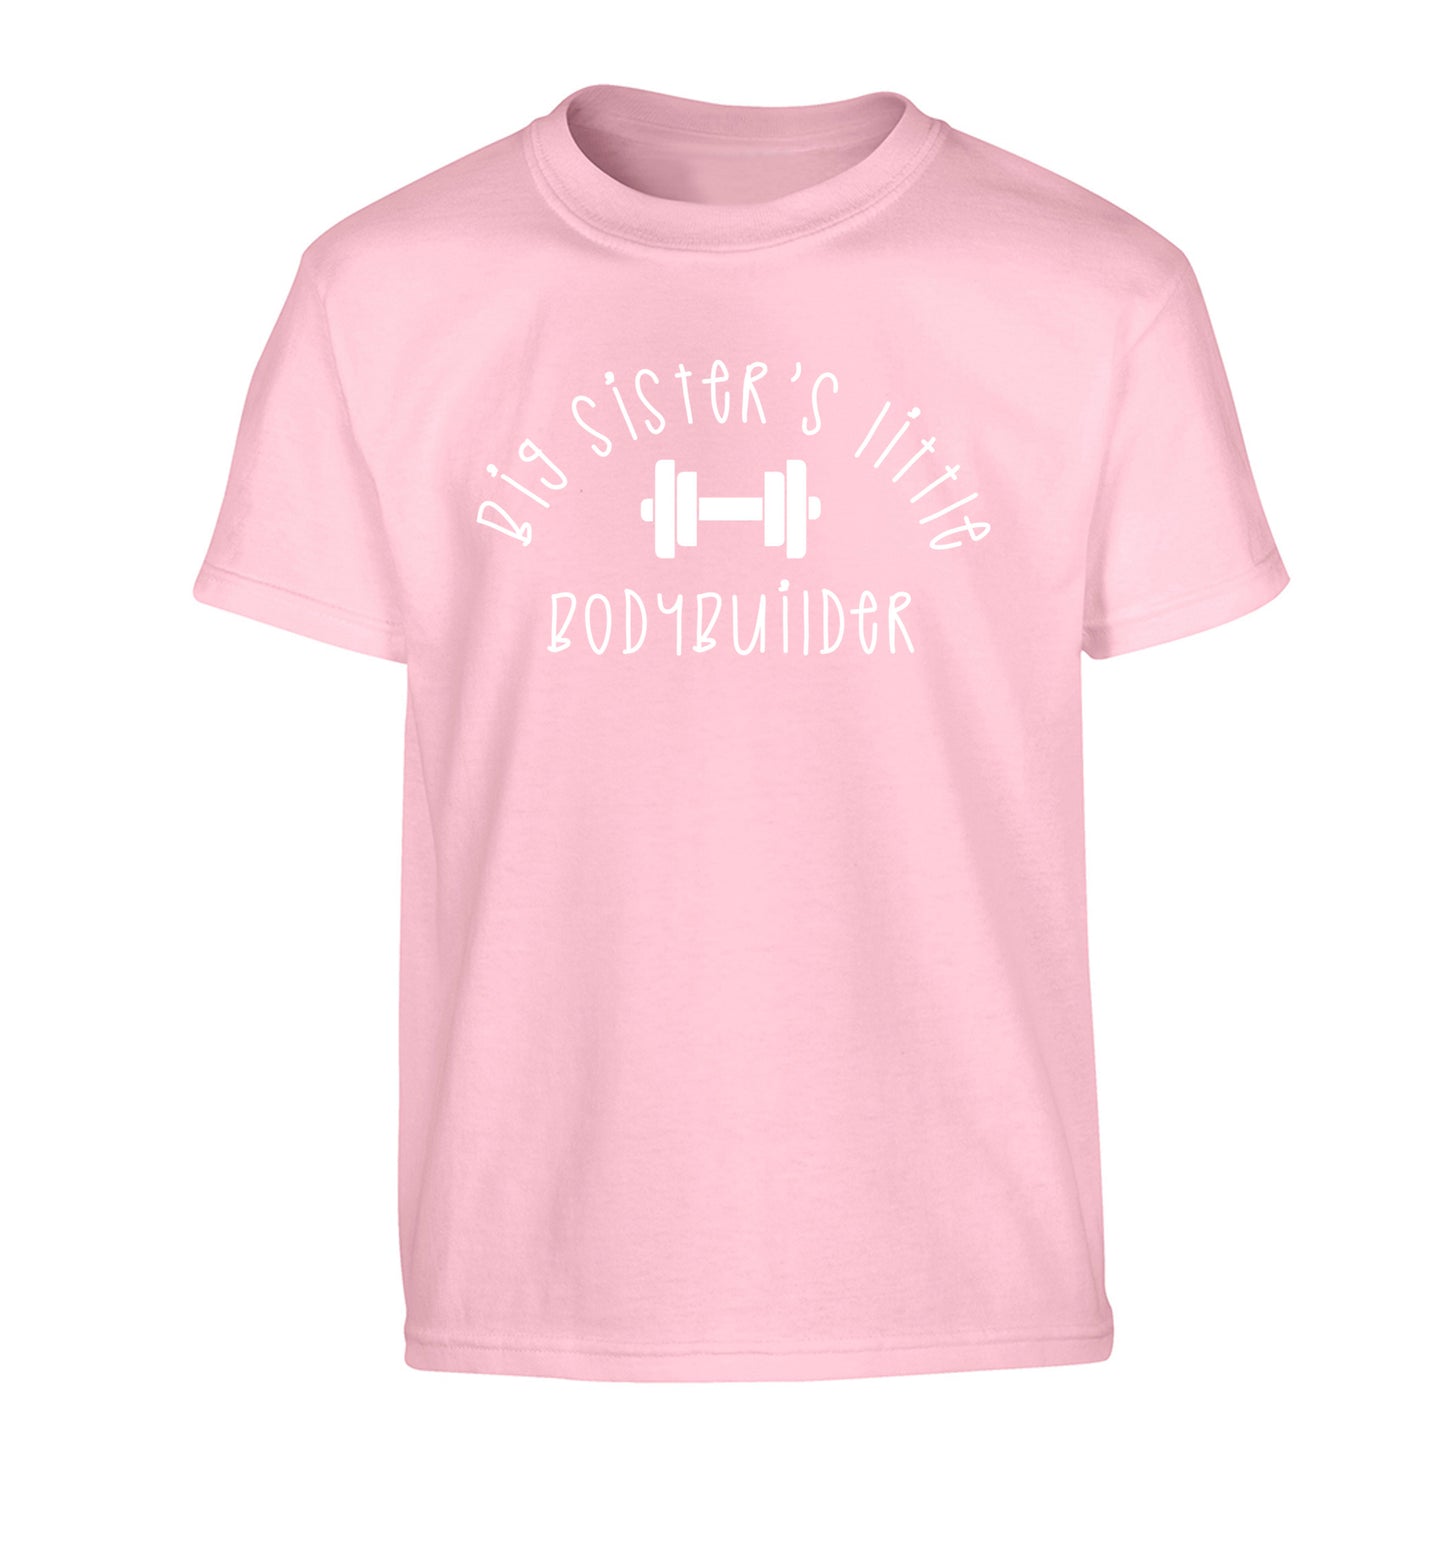 Big sister's little bodybuilder Children's light pink Tshirt 12-14 Years